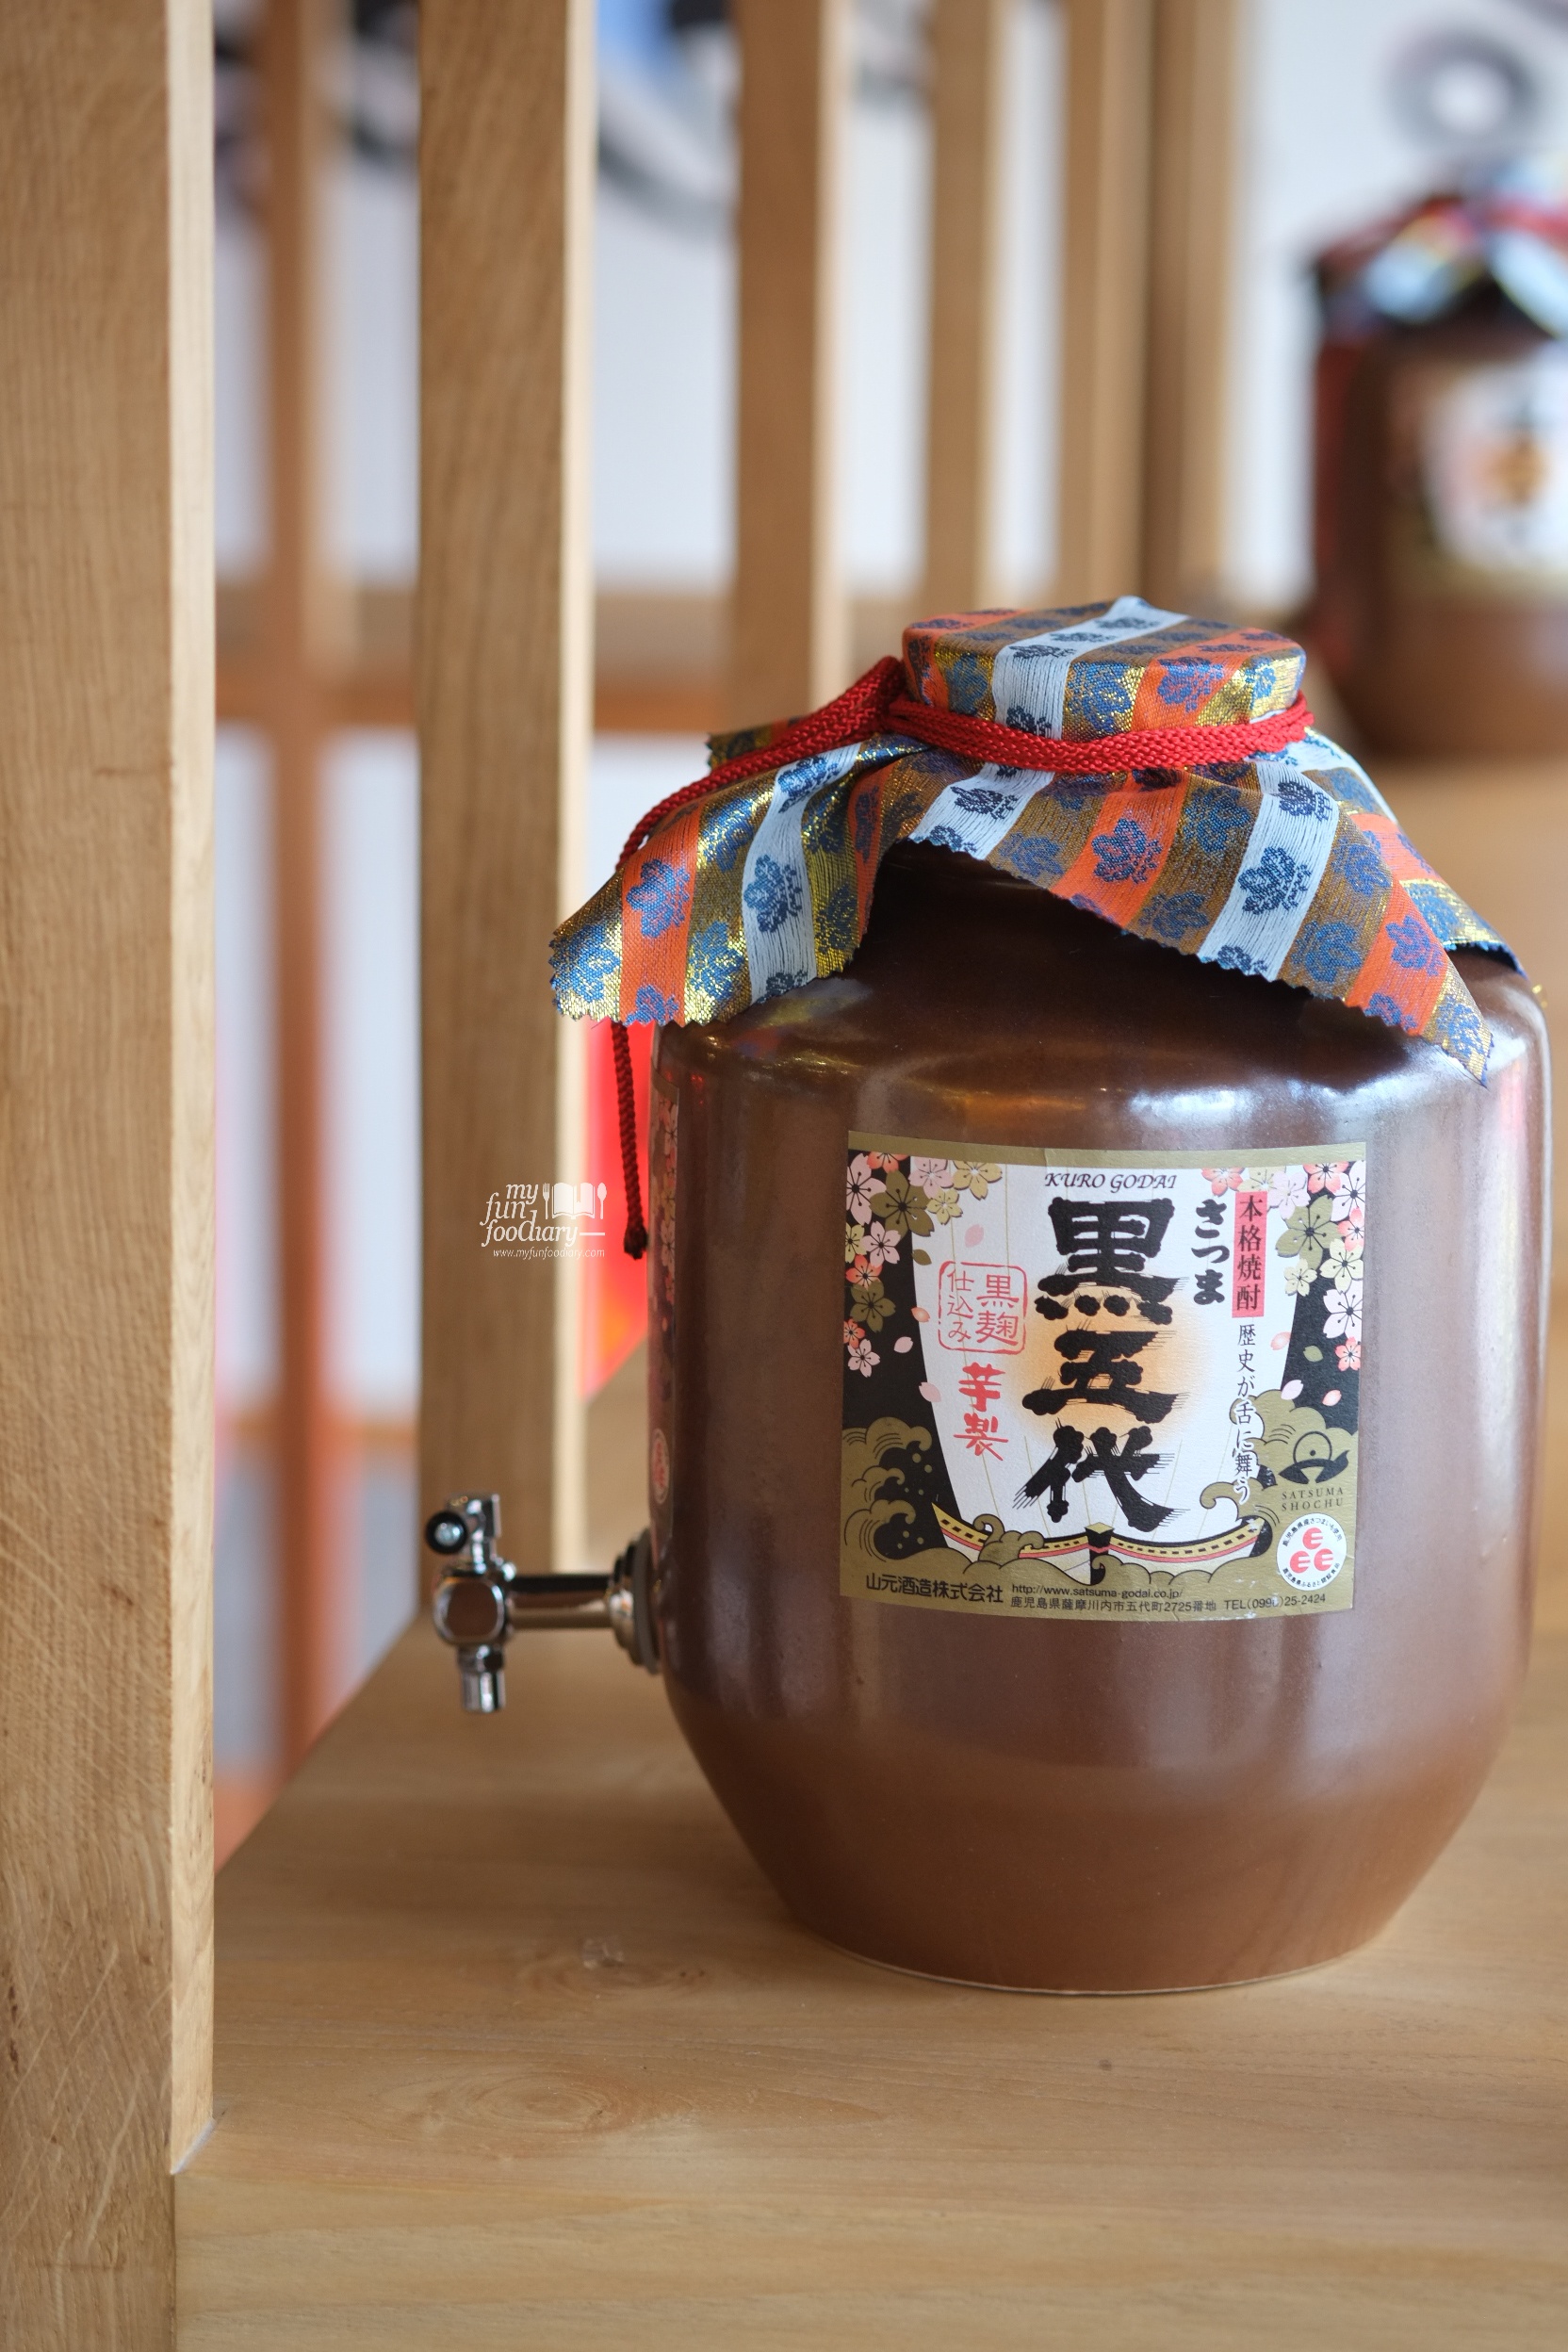 Unique Jar at Ebisuya Restaurant by Myfunfoodiary